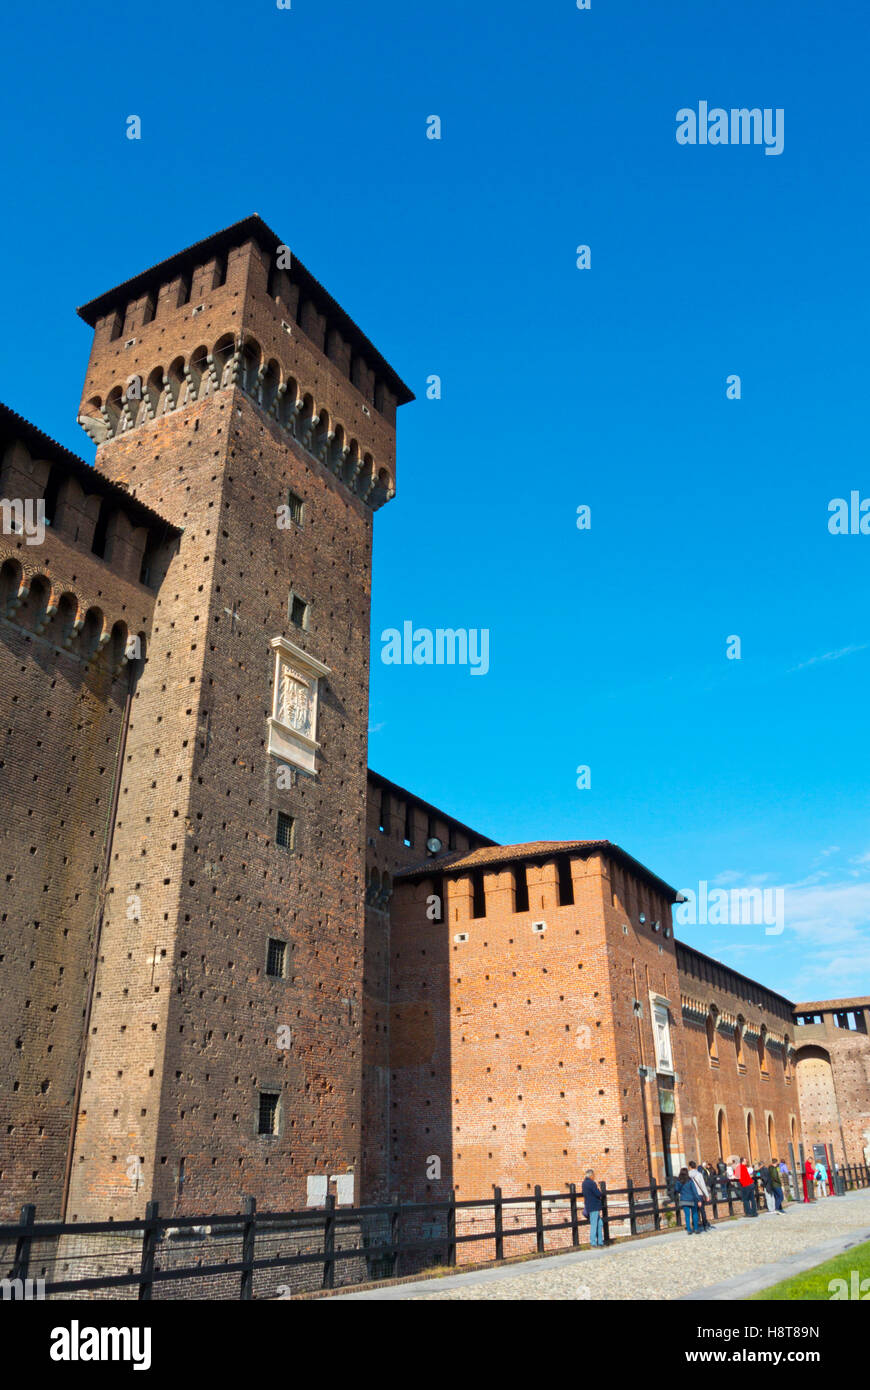 Castello di porta giovia hi-res stock photography and images - Alamy